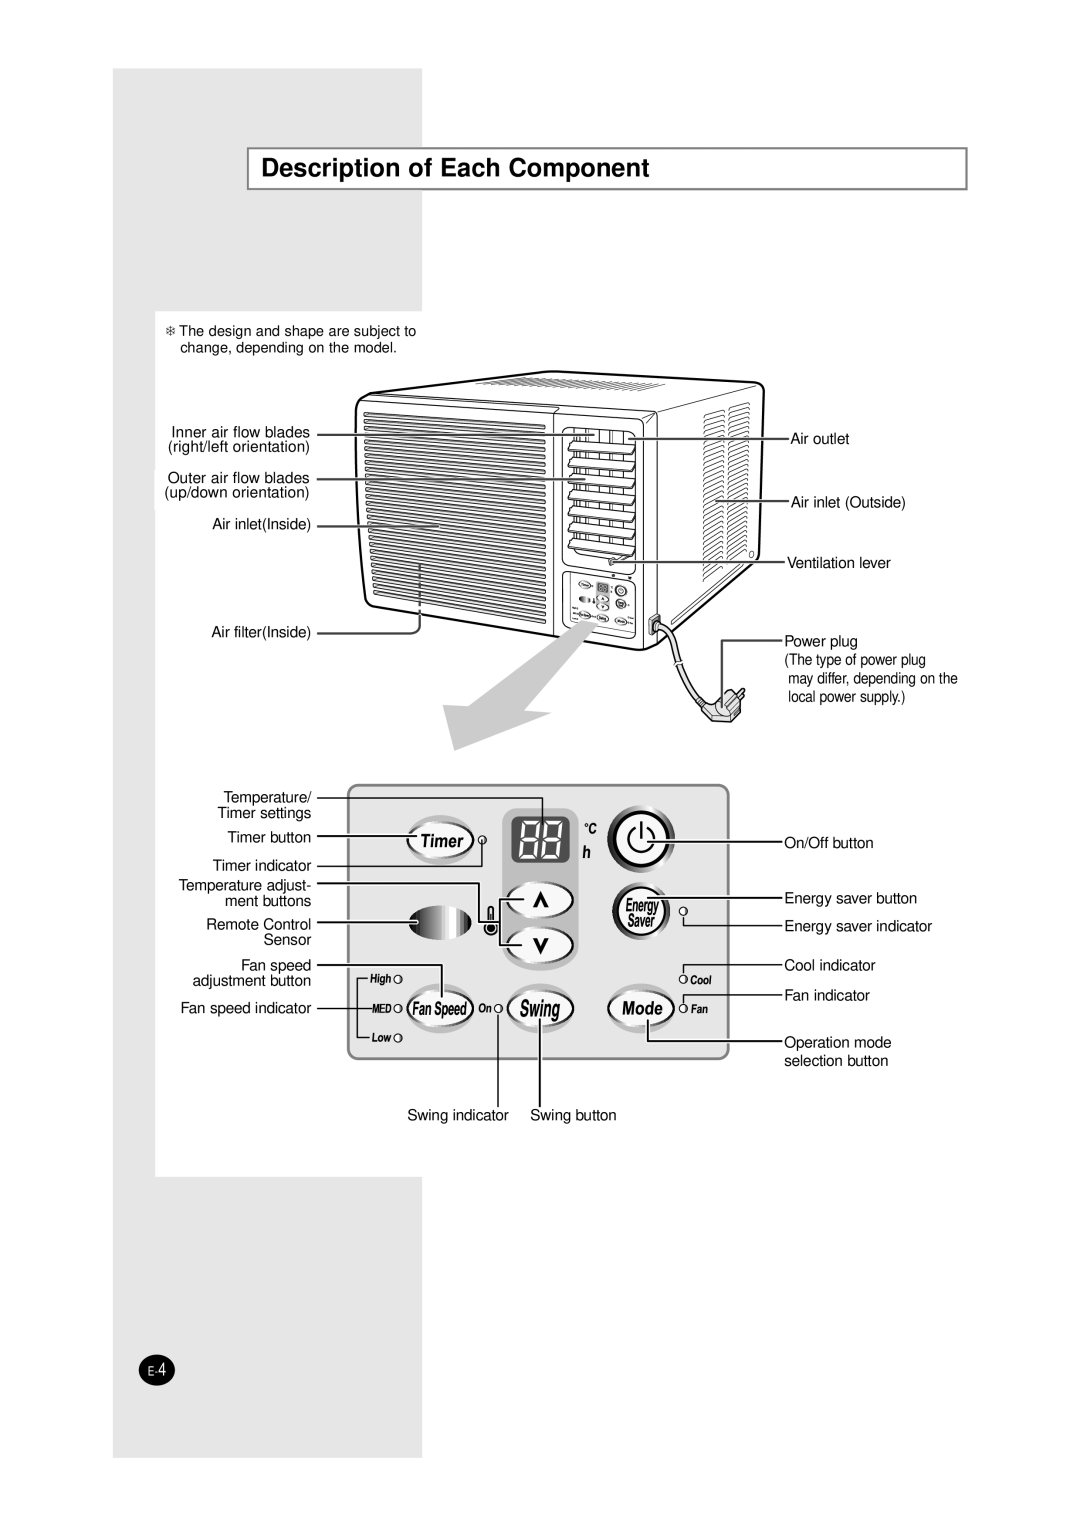 Samsung AW0690, AW1290, AW1090, AW0890 manual Description of Each Component 